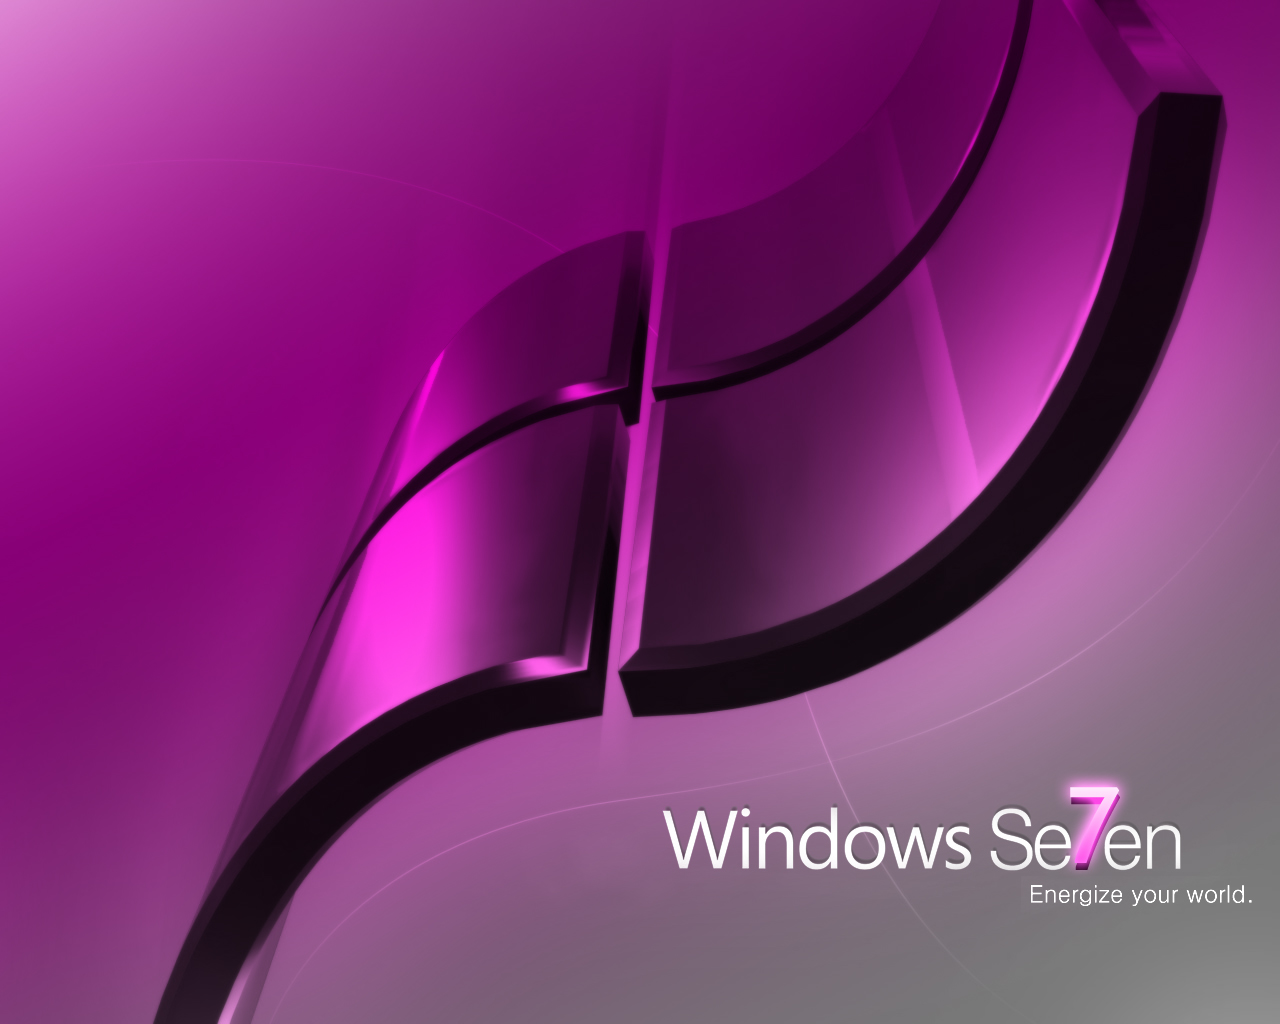 http://4.bp.blogspot.com/-7C94USlW9fQ/Tli5oPuQBqI/AAAAAAAAAjw/NB_ah-jHJBg/s1600/Windows_seven_pink_7+hd+desktop+wallpapers.jpg